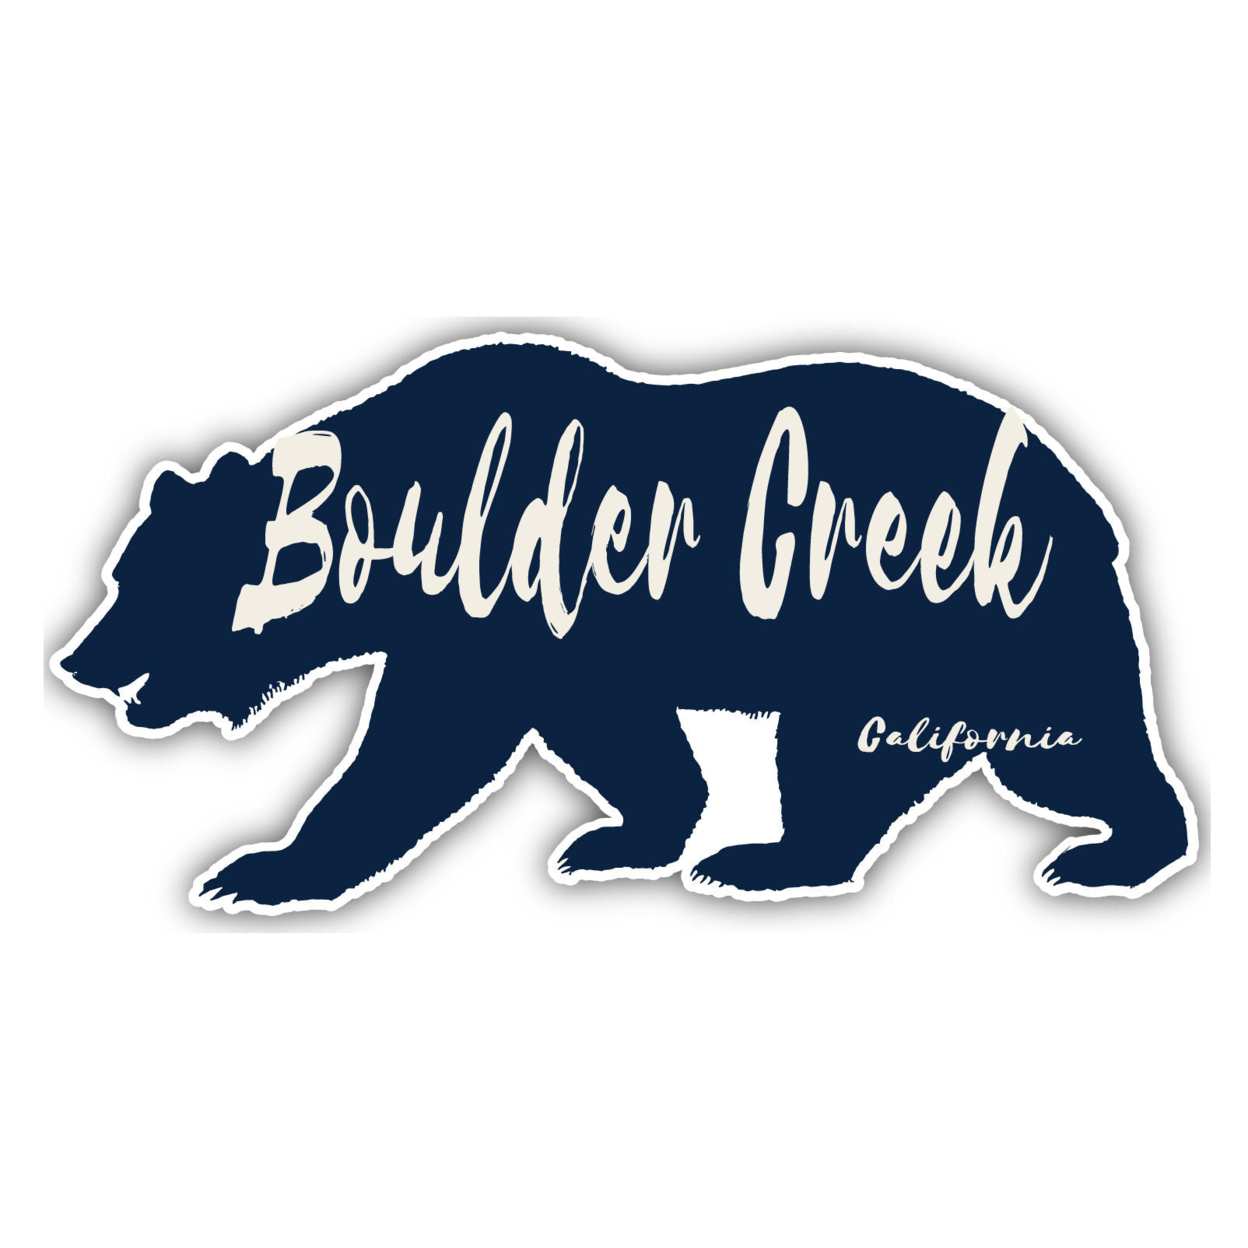 Boulder Creek California Souvenir Decorative Stickers (Choose Theme And Size) - 4-Pack, 12-Inch, Bear